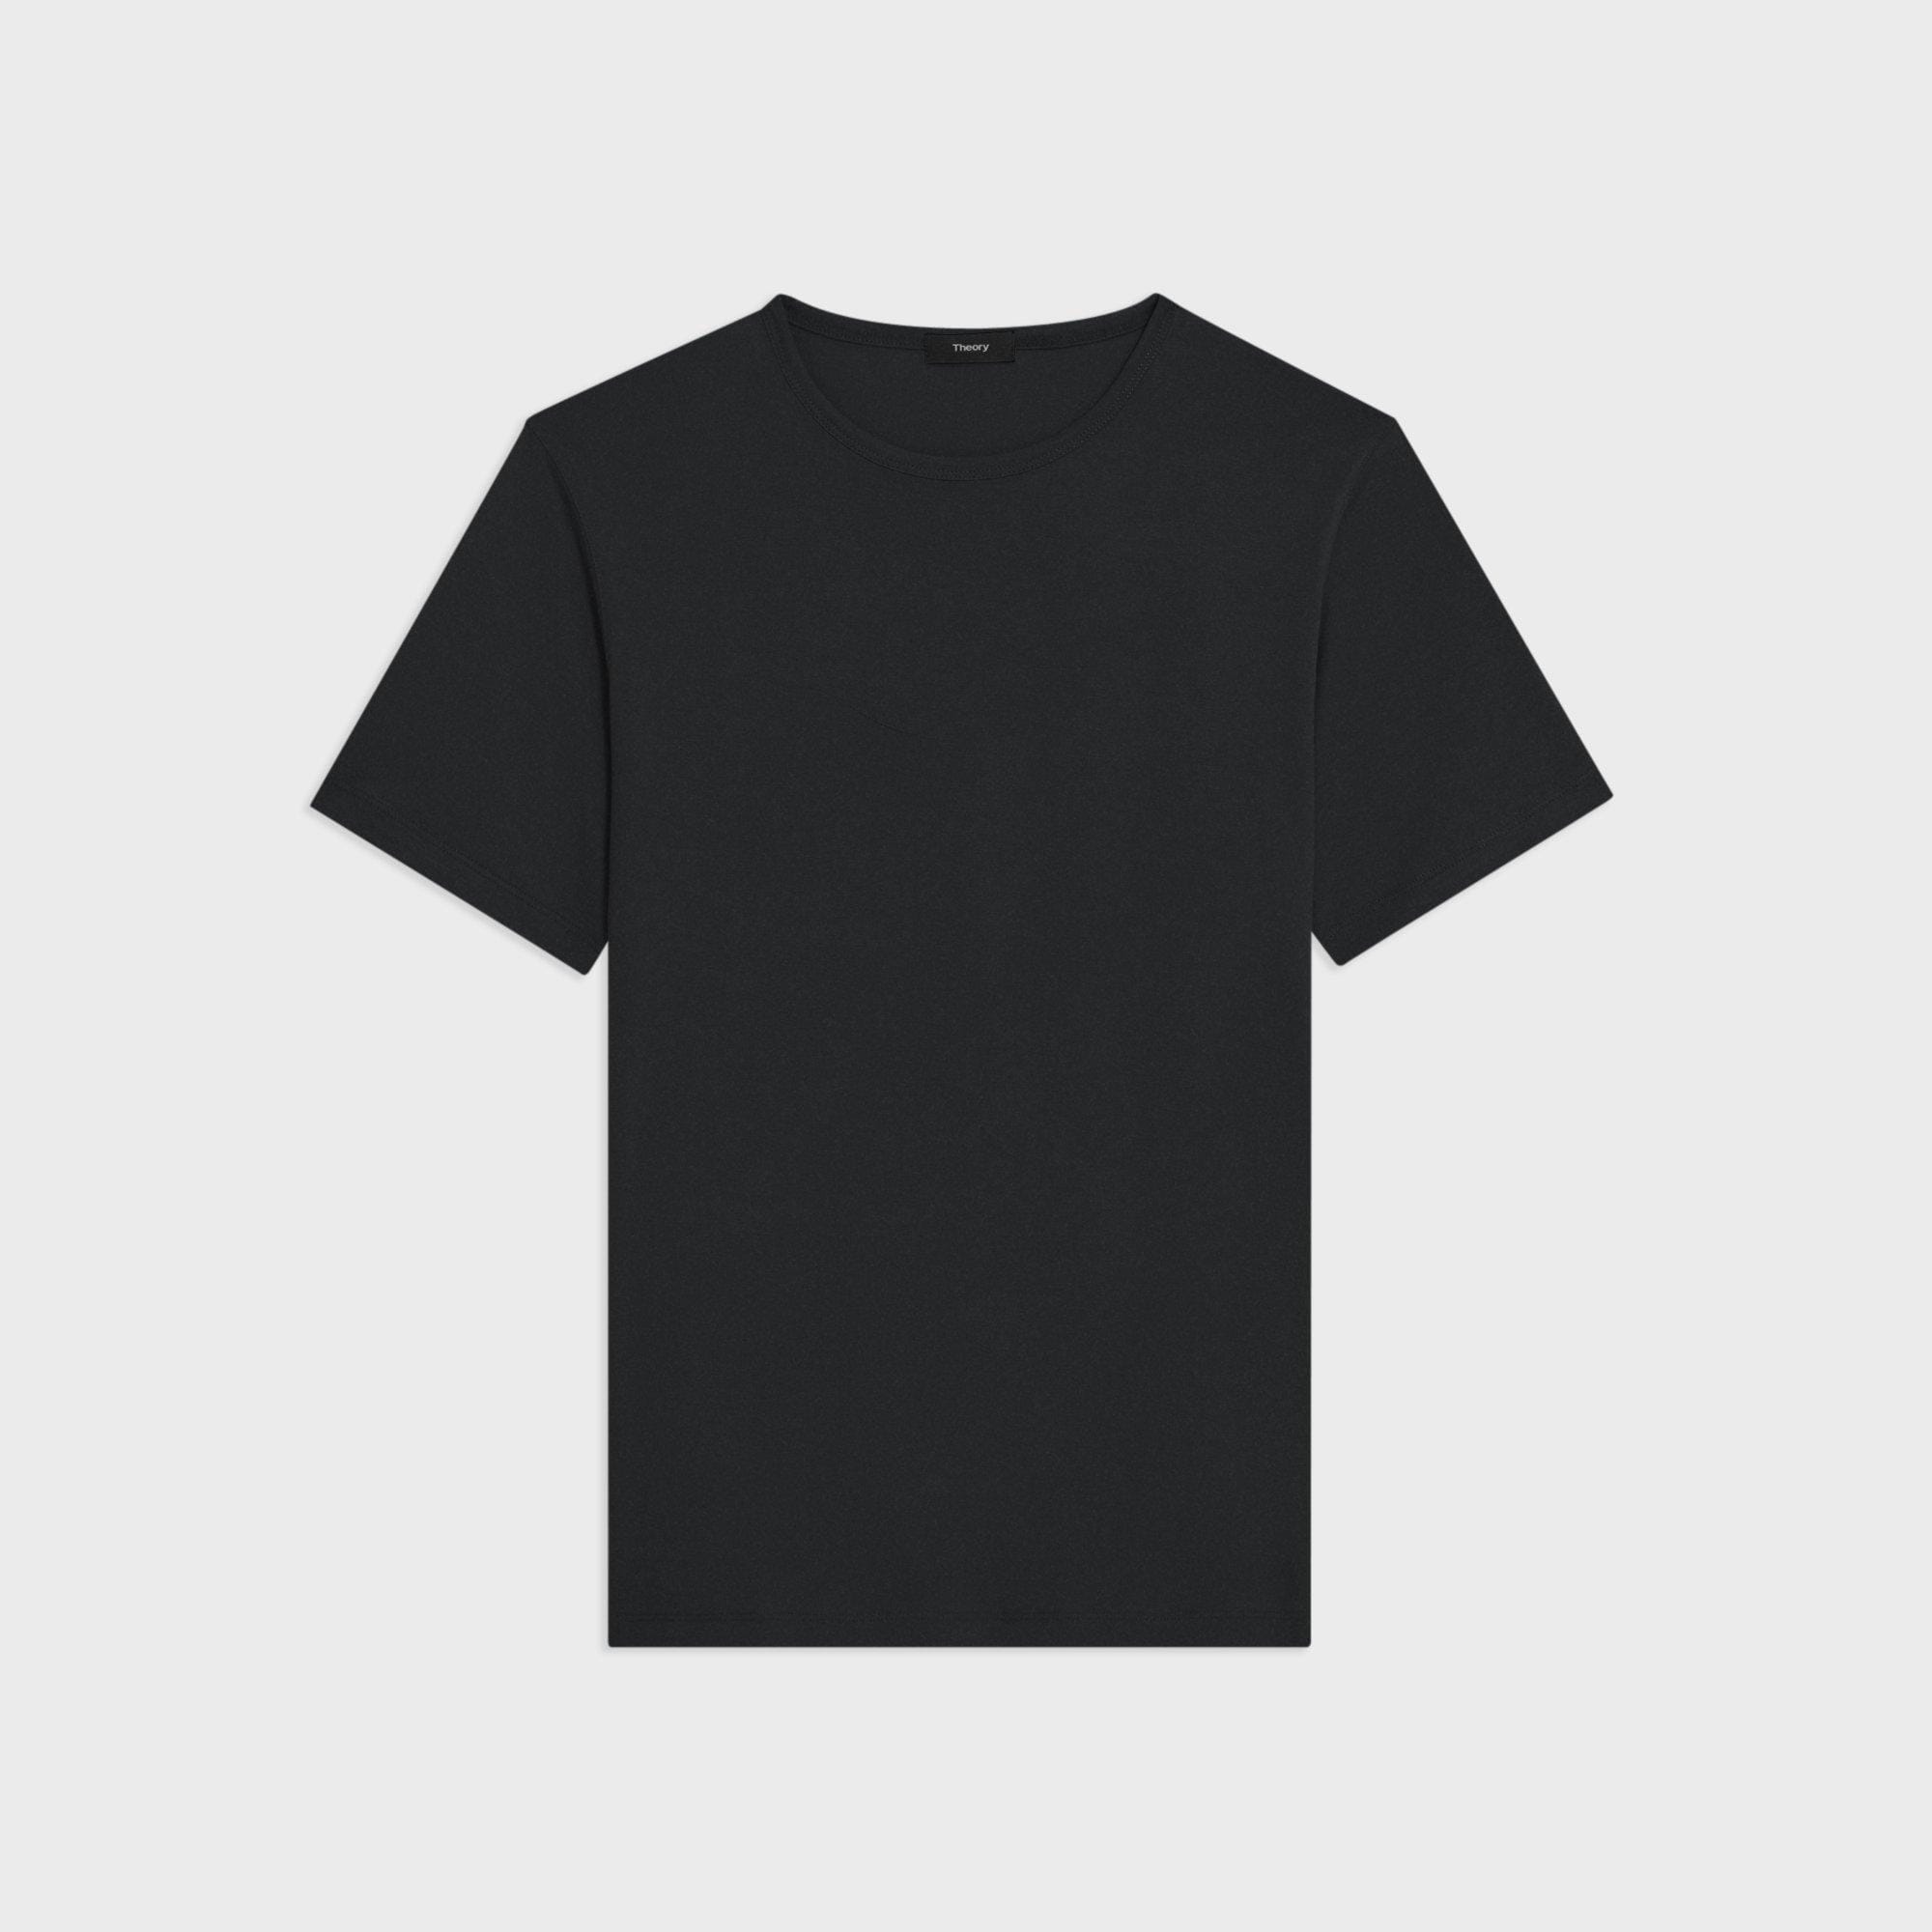 T-shirts – The Luxury Shopper